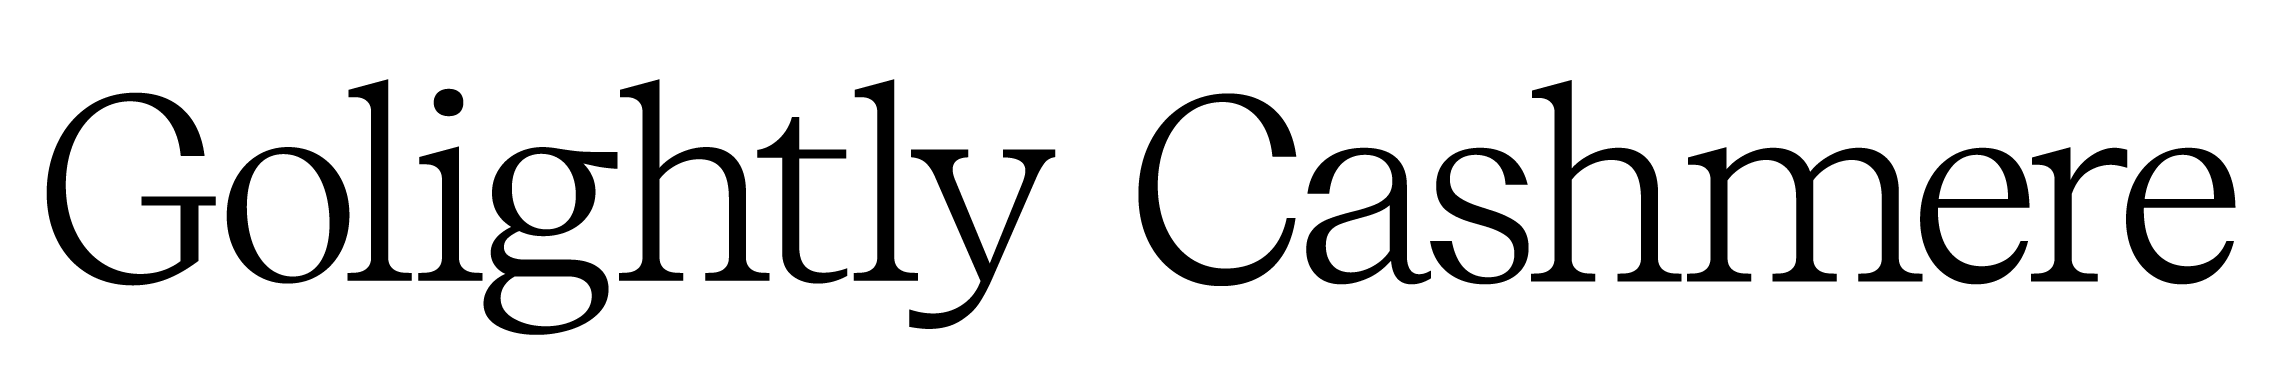 Golightly Cashmere logo